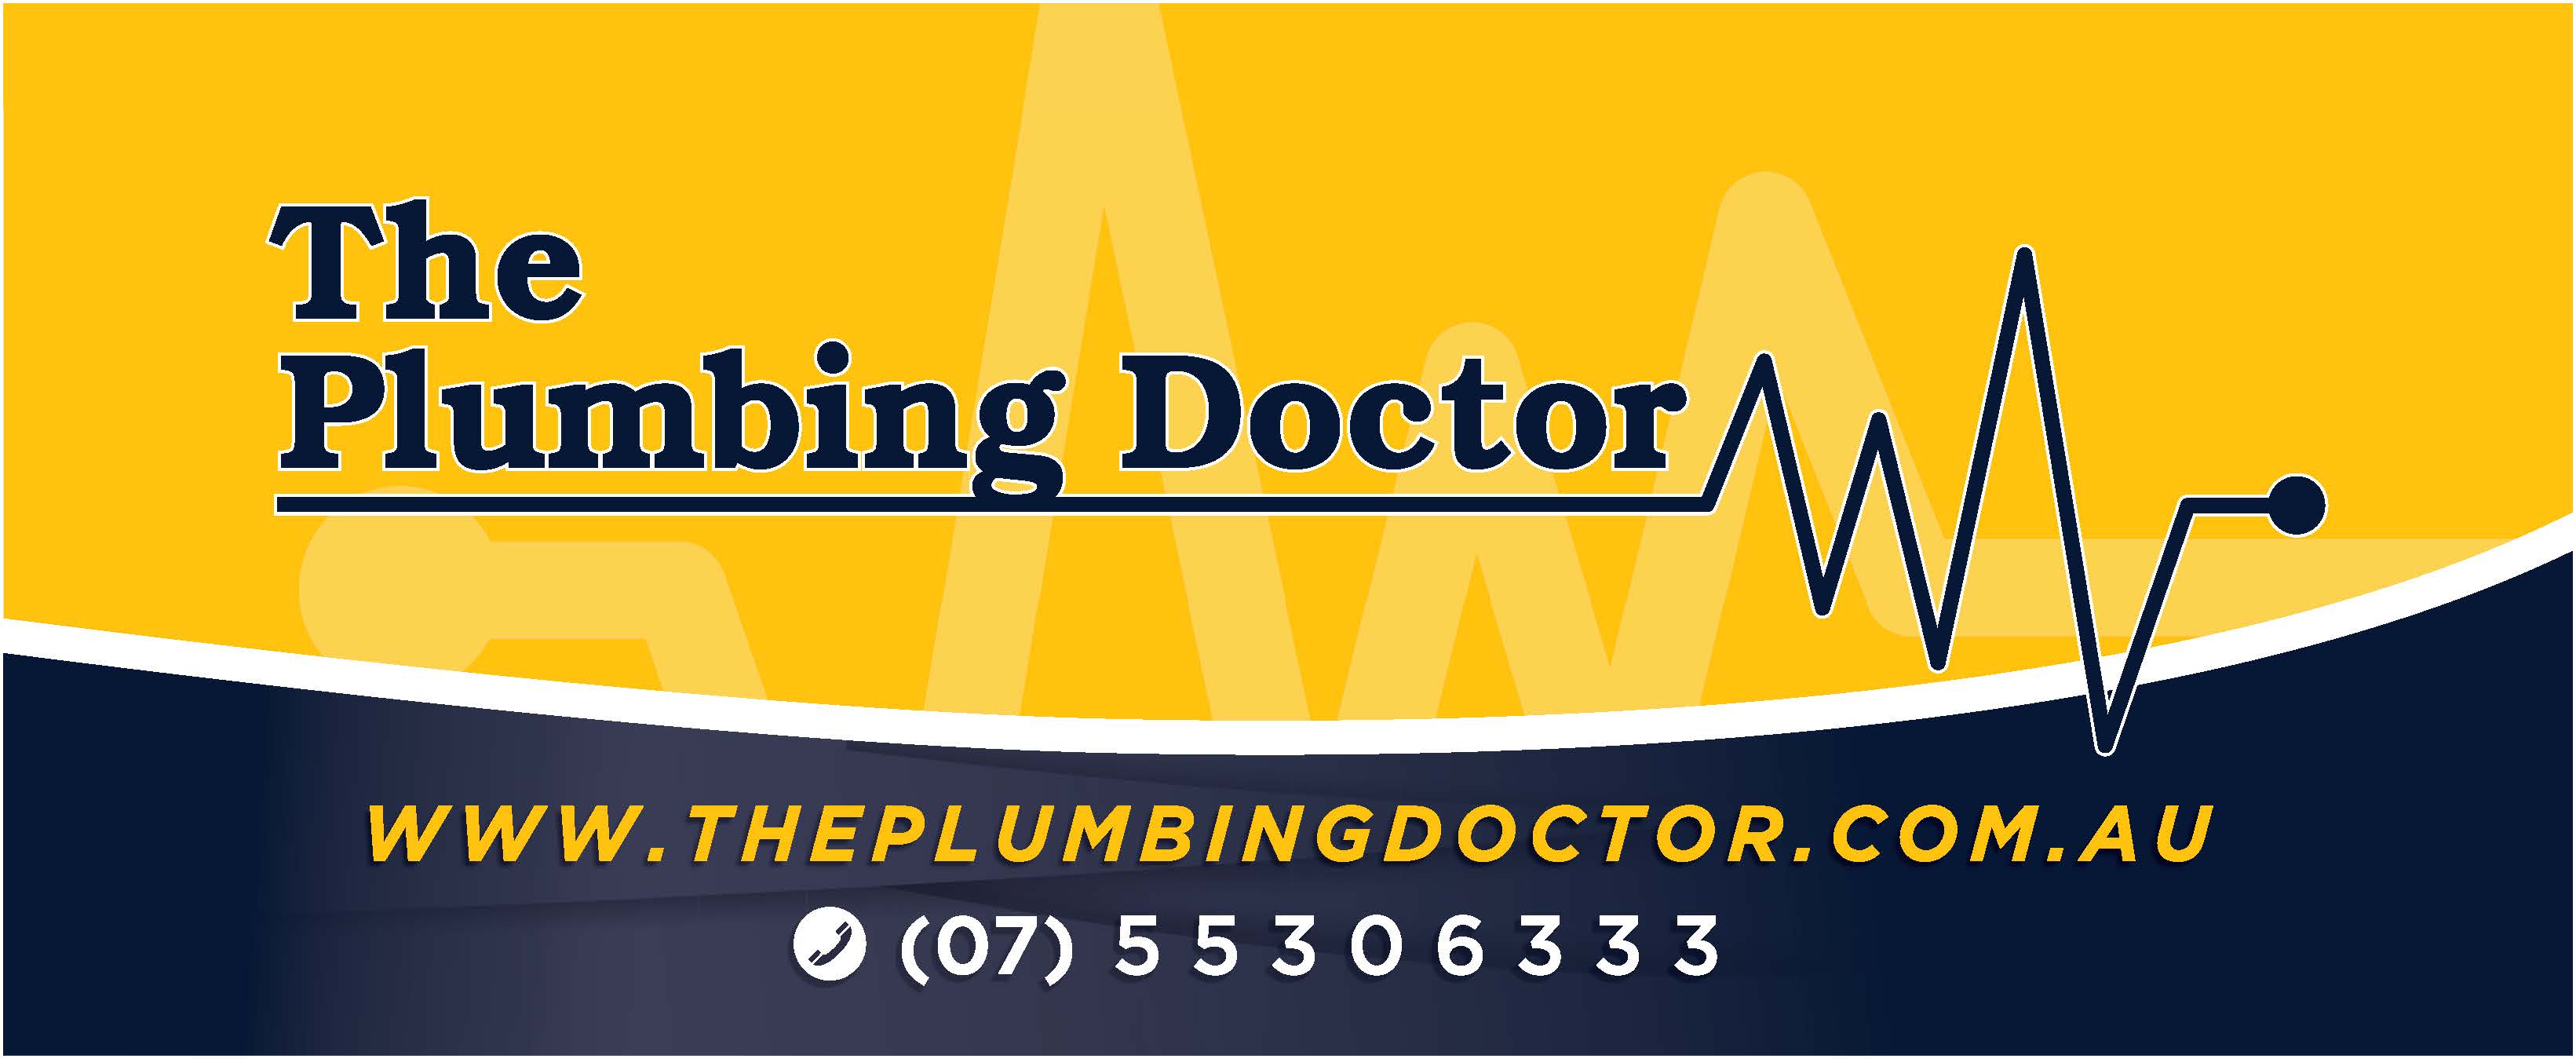 The Plumbing Doctor Logo 2.jpg